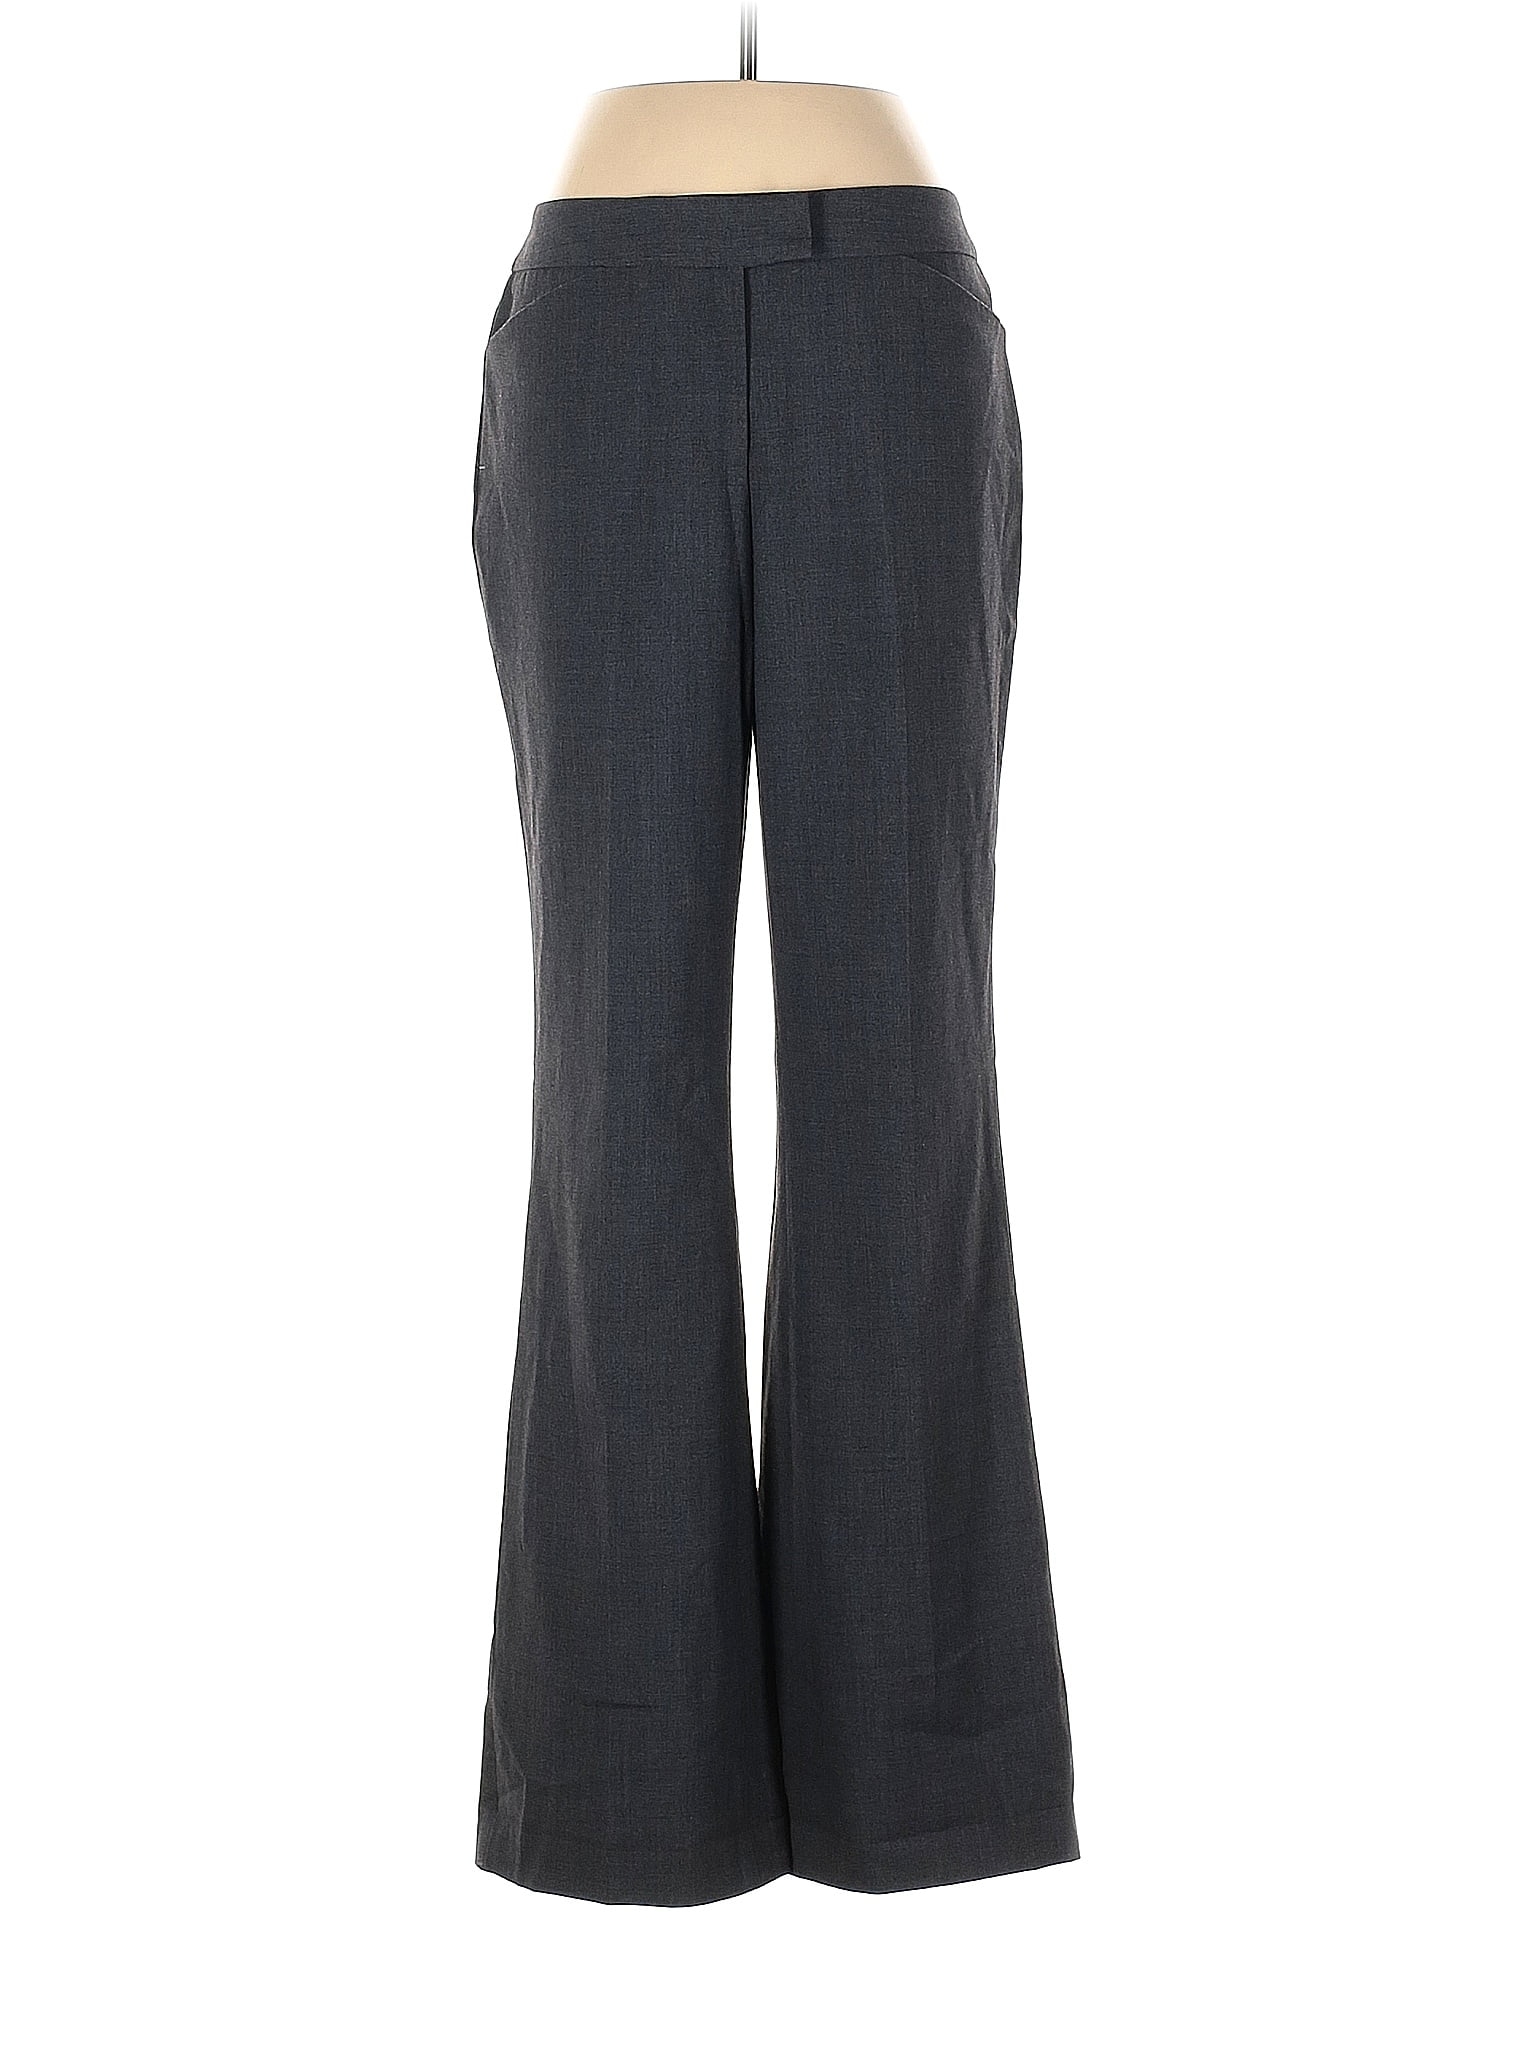 Calvin Klein Solid Black Dress Pants Size 6 - 71% off | thredUP